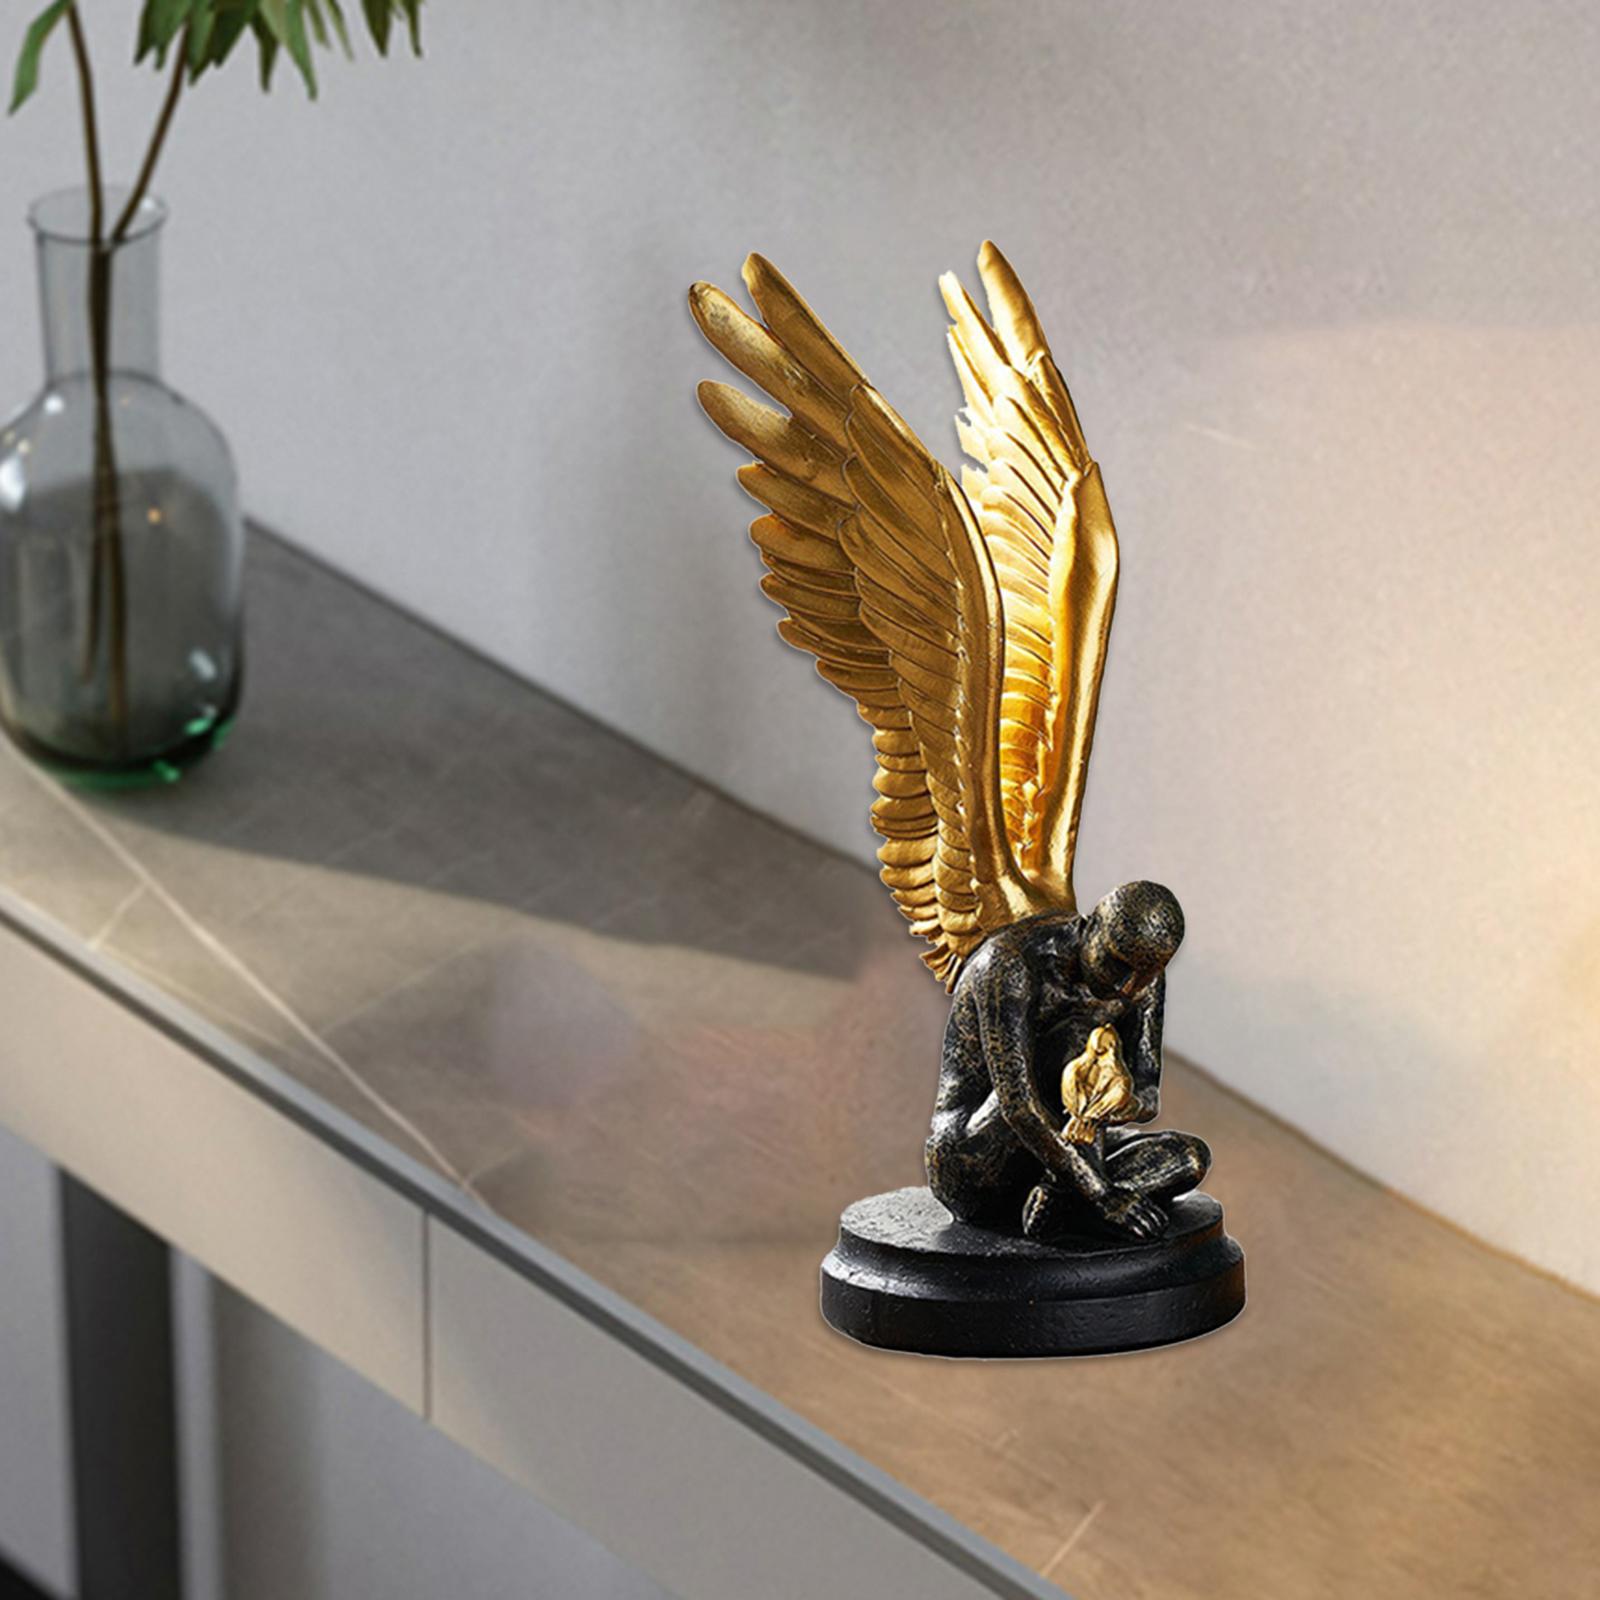 Retro Angel Wing Figures Vivid Statue Office Decor Accessory Ornament Gift golden